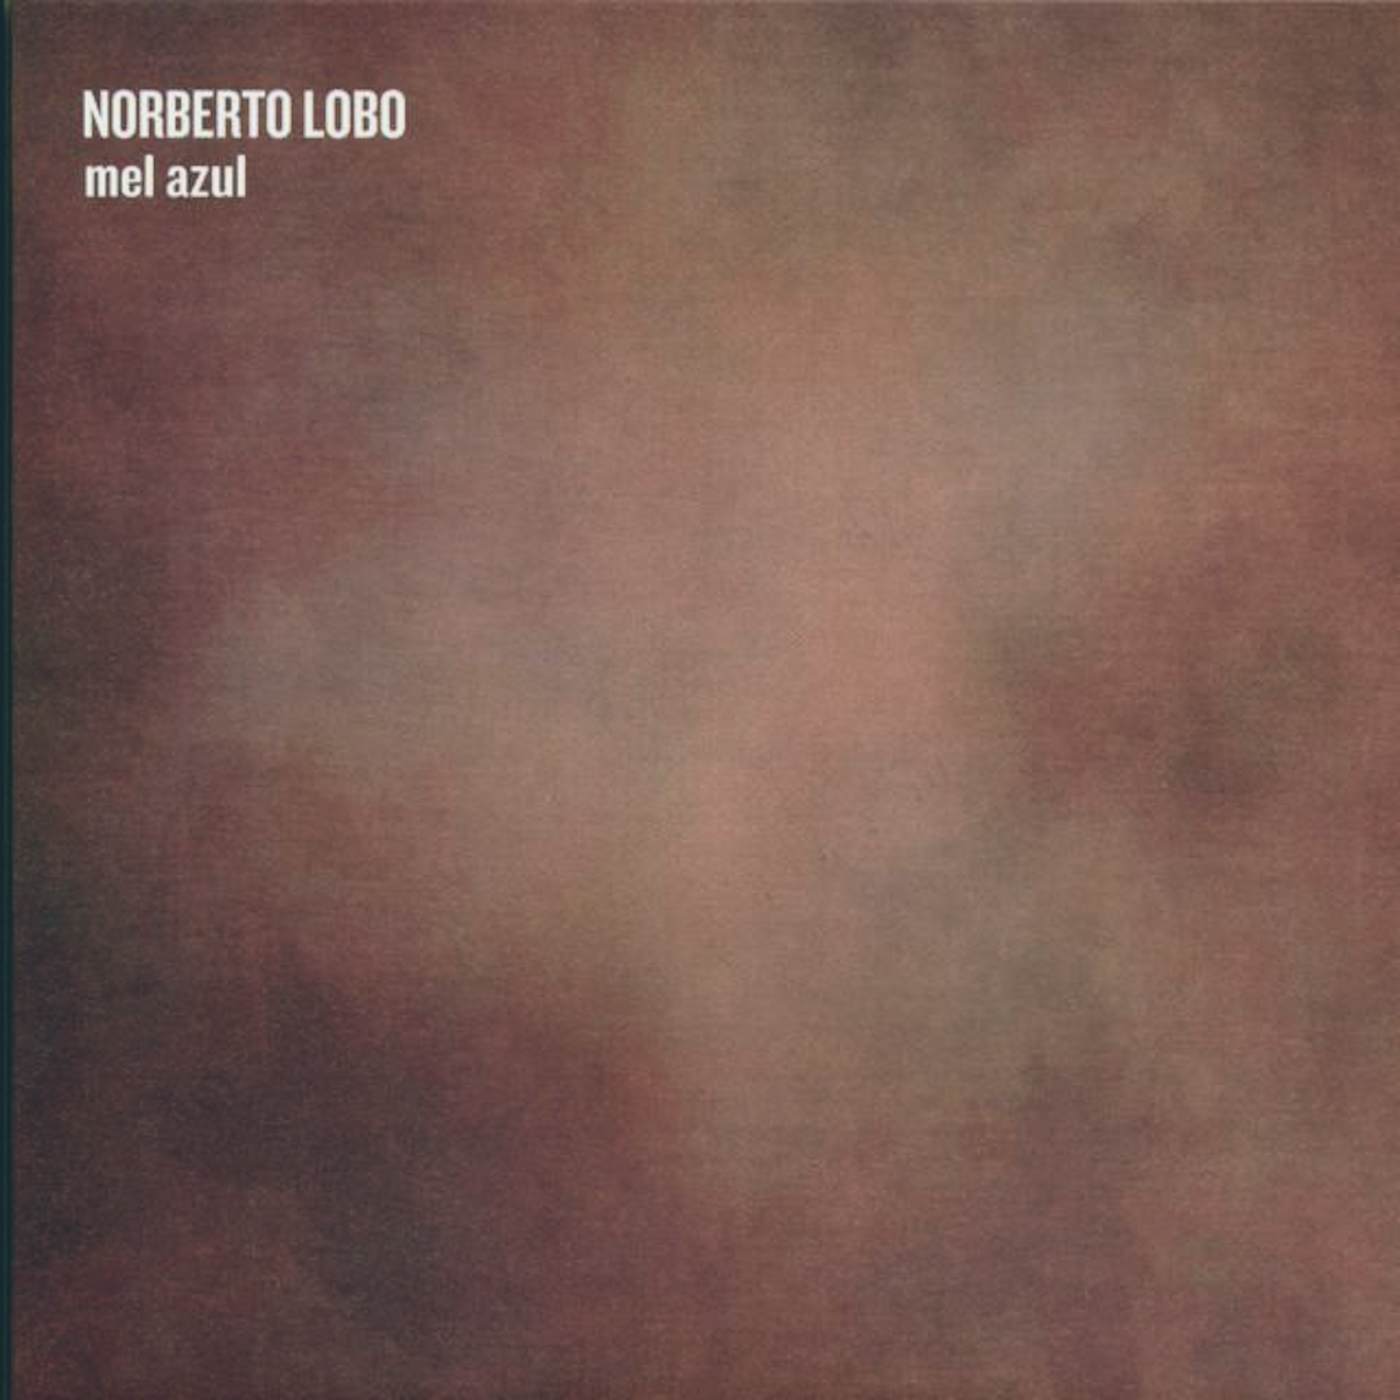 Norberto Lobo